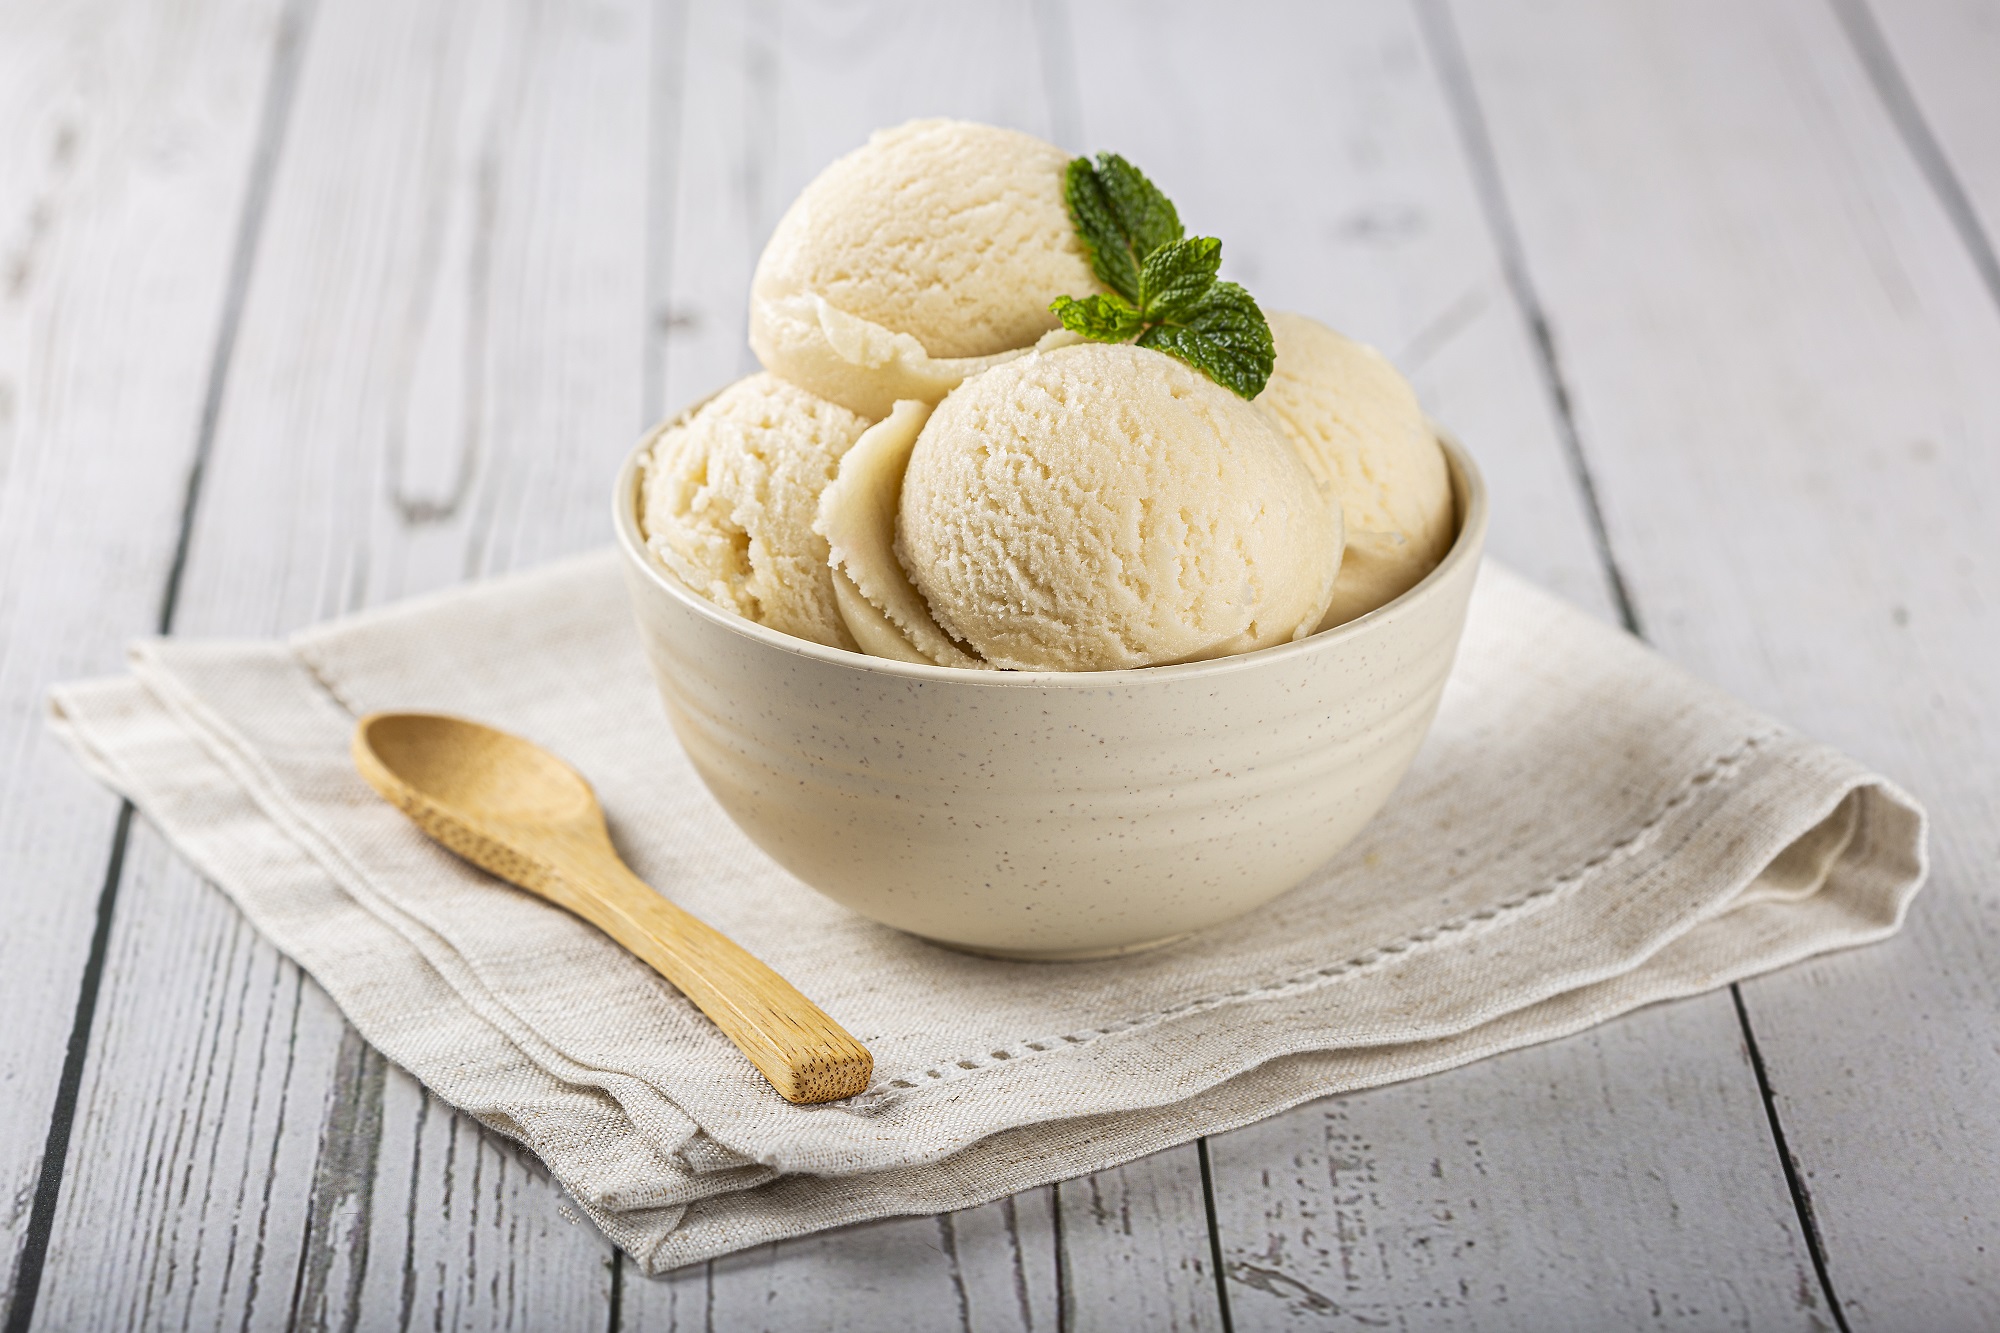 Android 15 codename revealed to be ‘Vanilla Ice Cream’